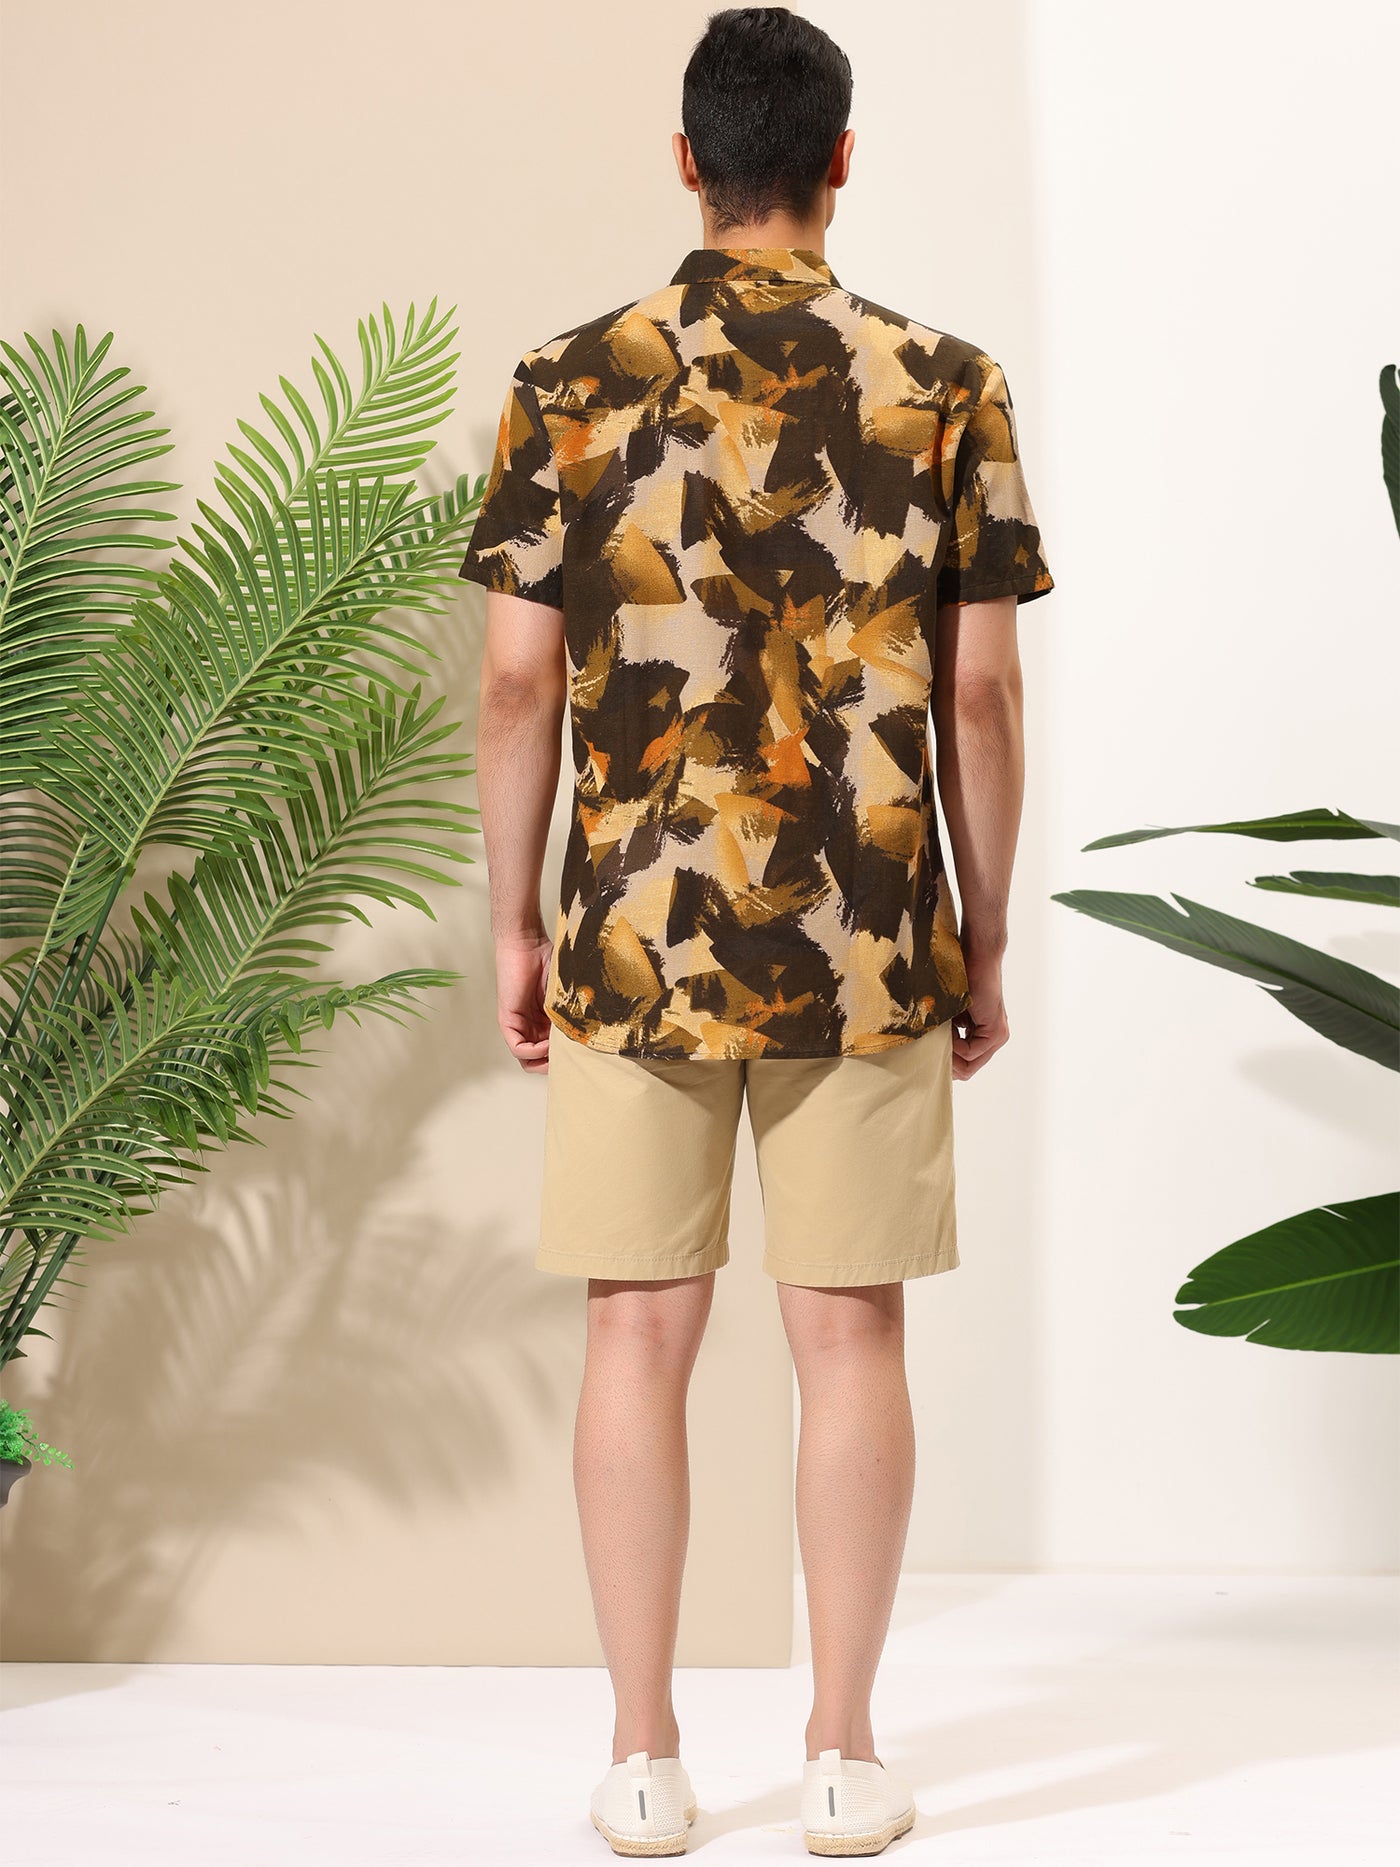 Bublédon Summer Irregular Geometric Pattern Hawaiian Shirt